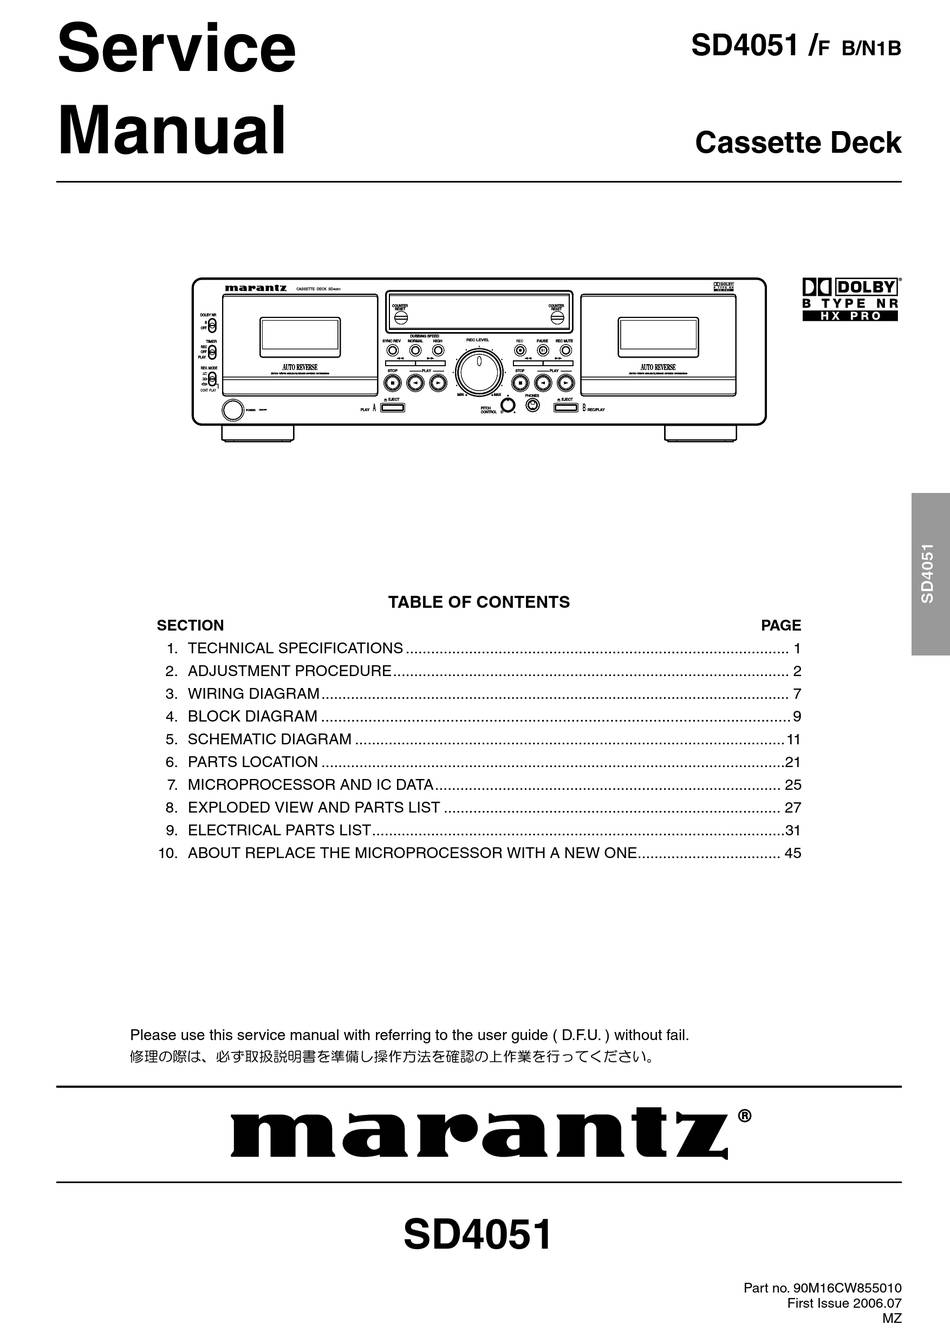 Marantz SD4051